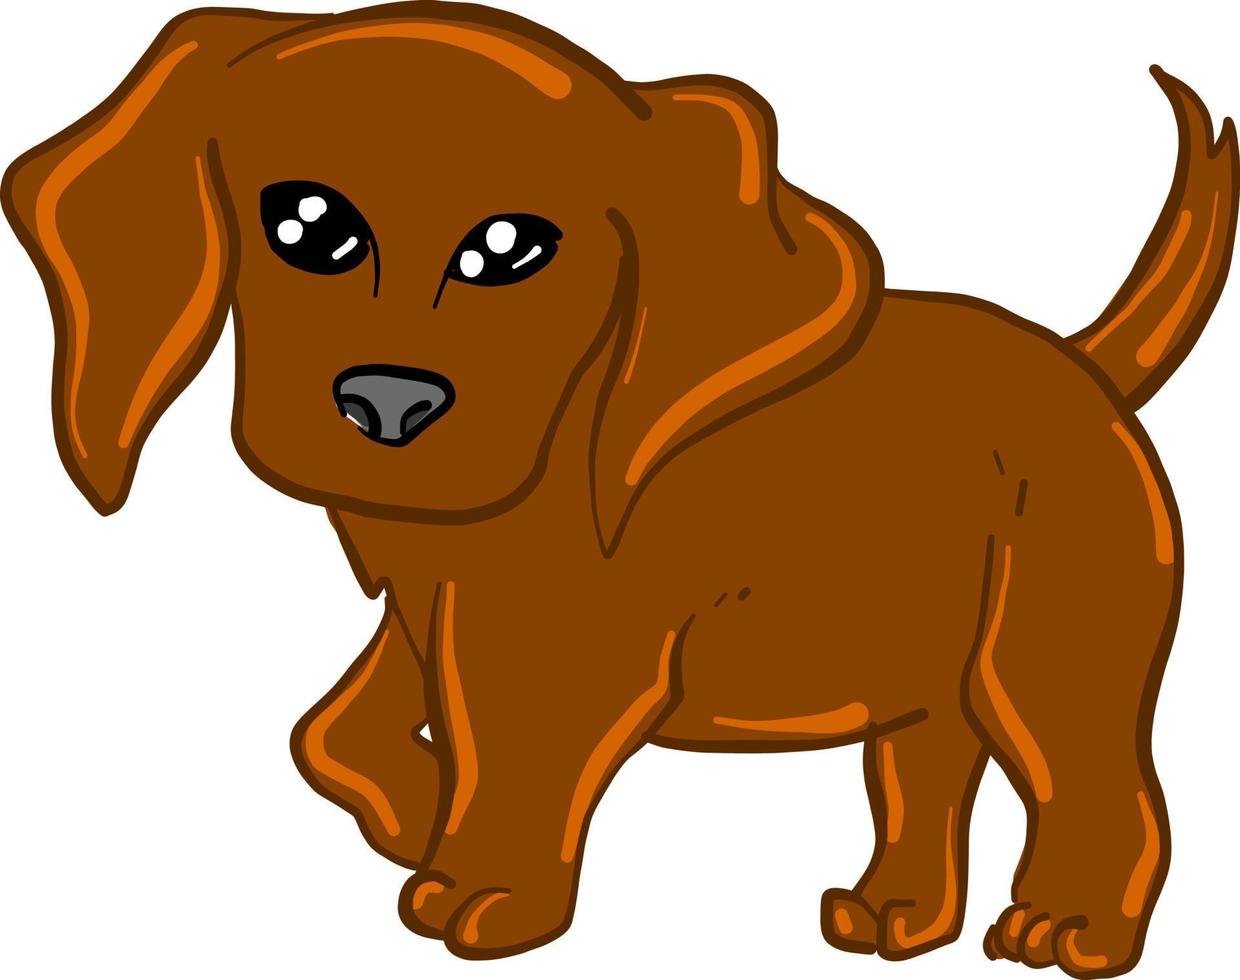 Chestnut dog, illustration, vector on white background